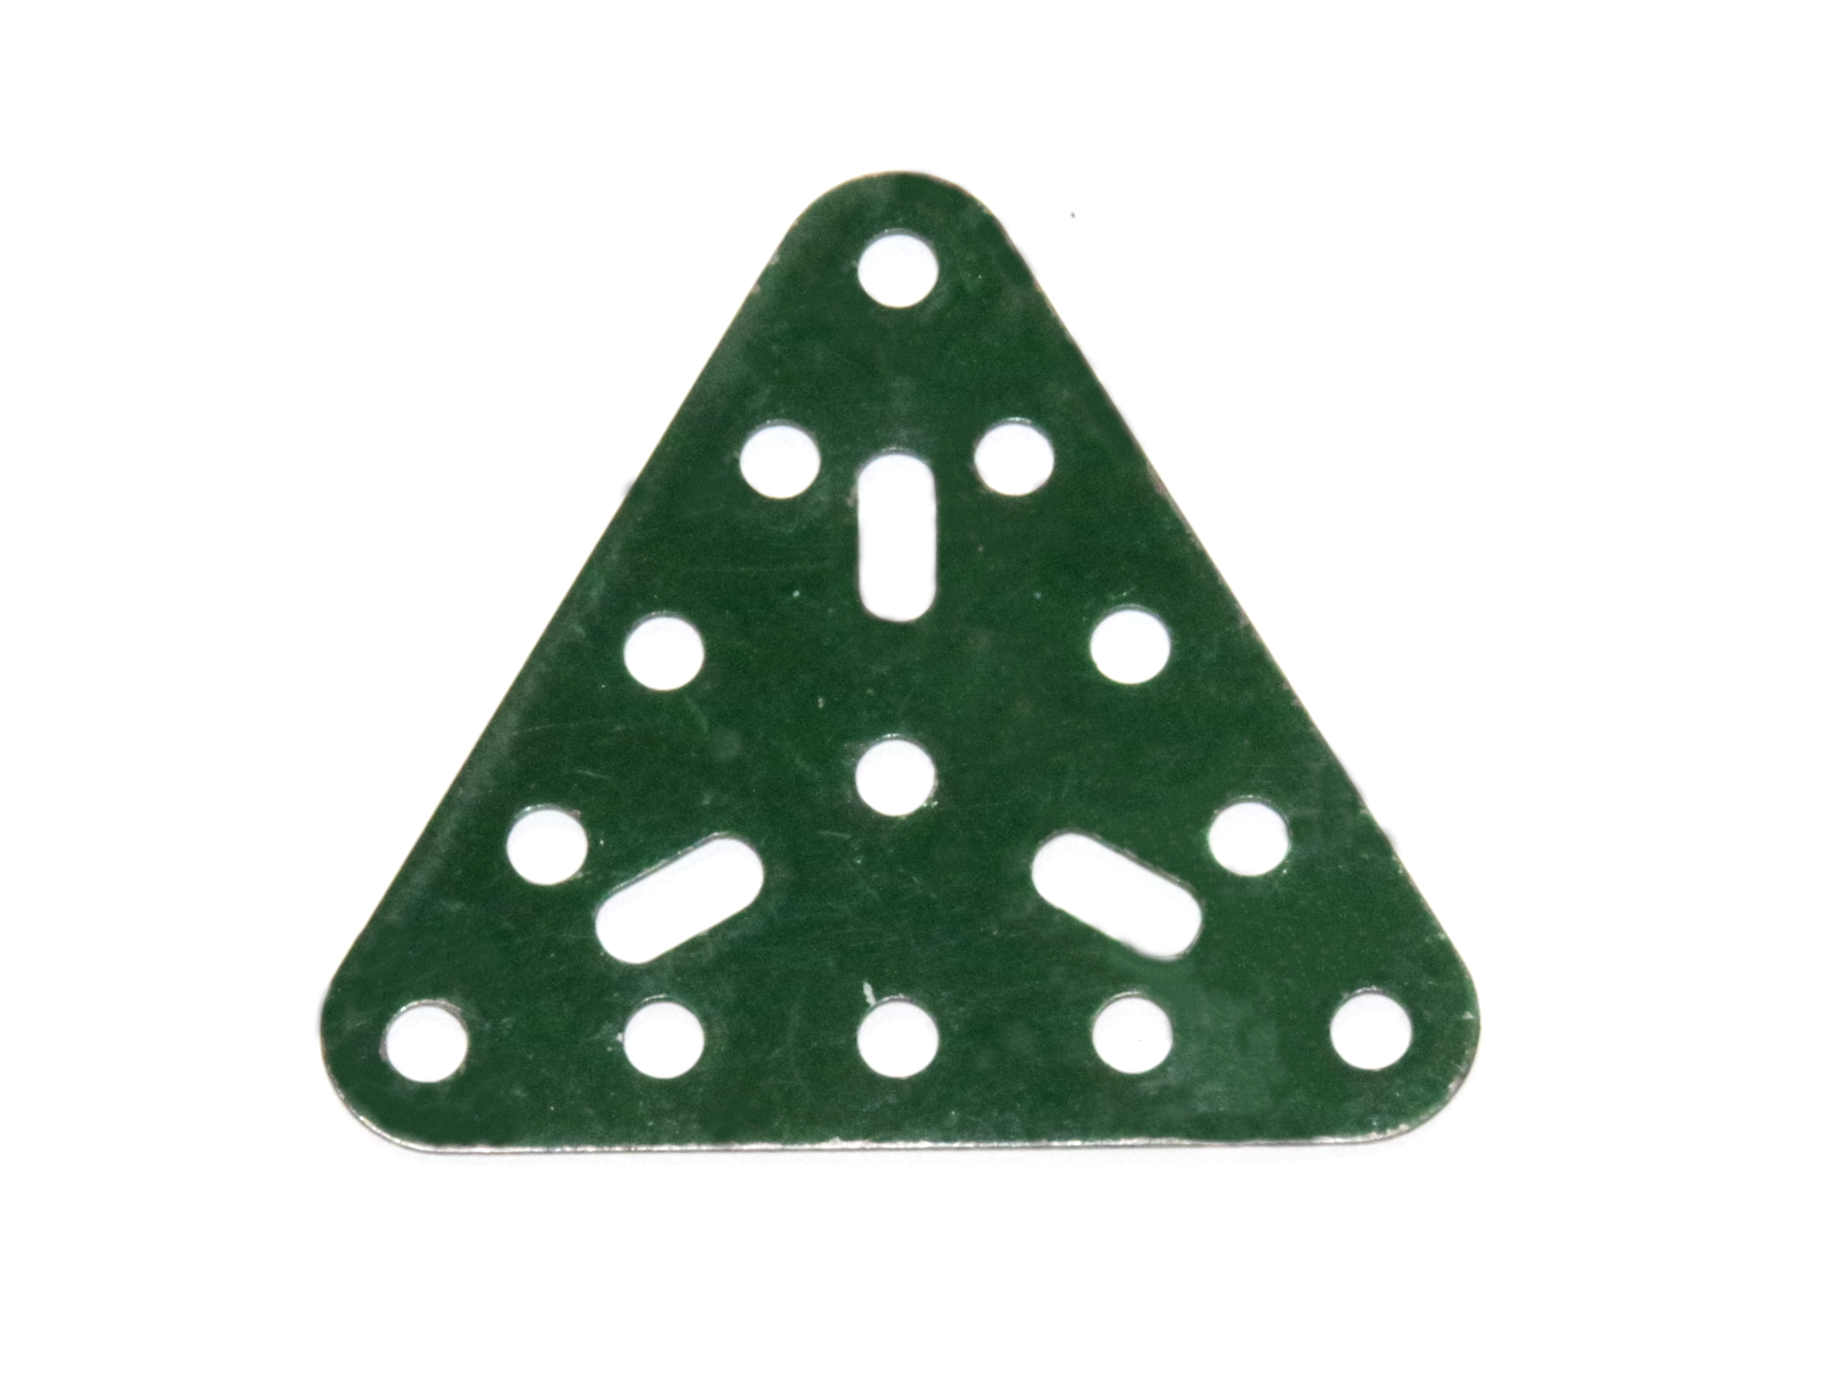 76 Triangular Plate 5x5x5 Dark Green Original